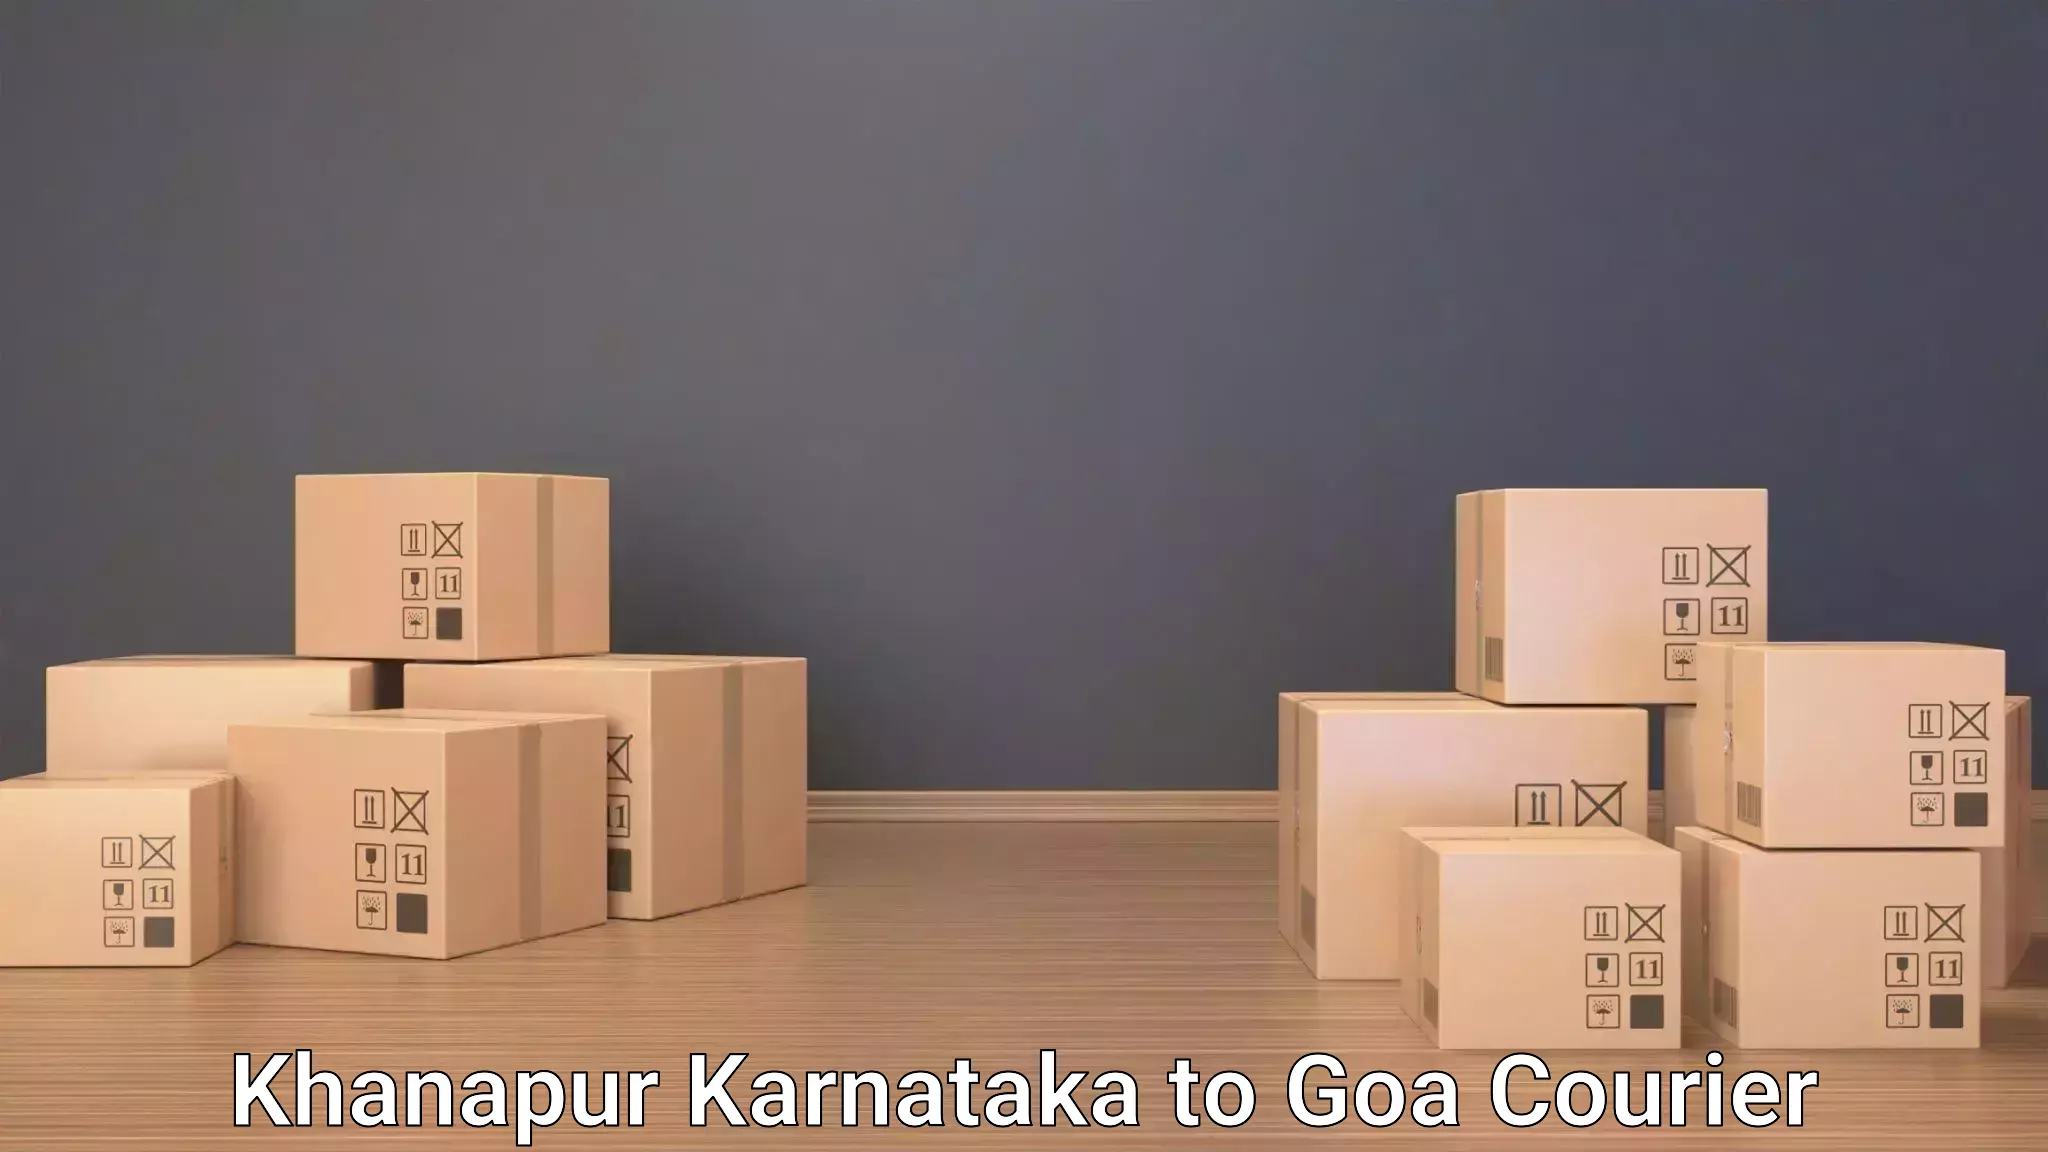 Baggage transport professionals Khanapur Karnataka to Ponda